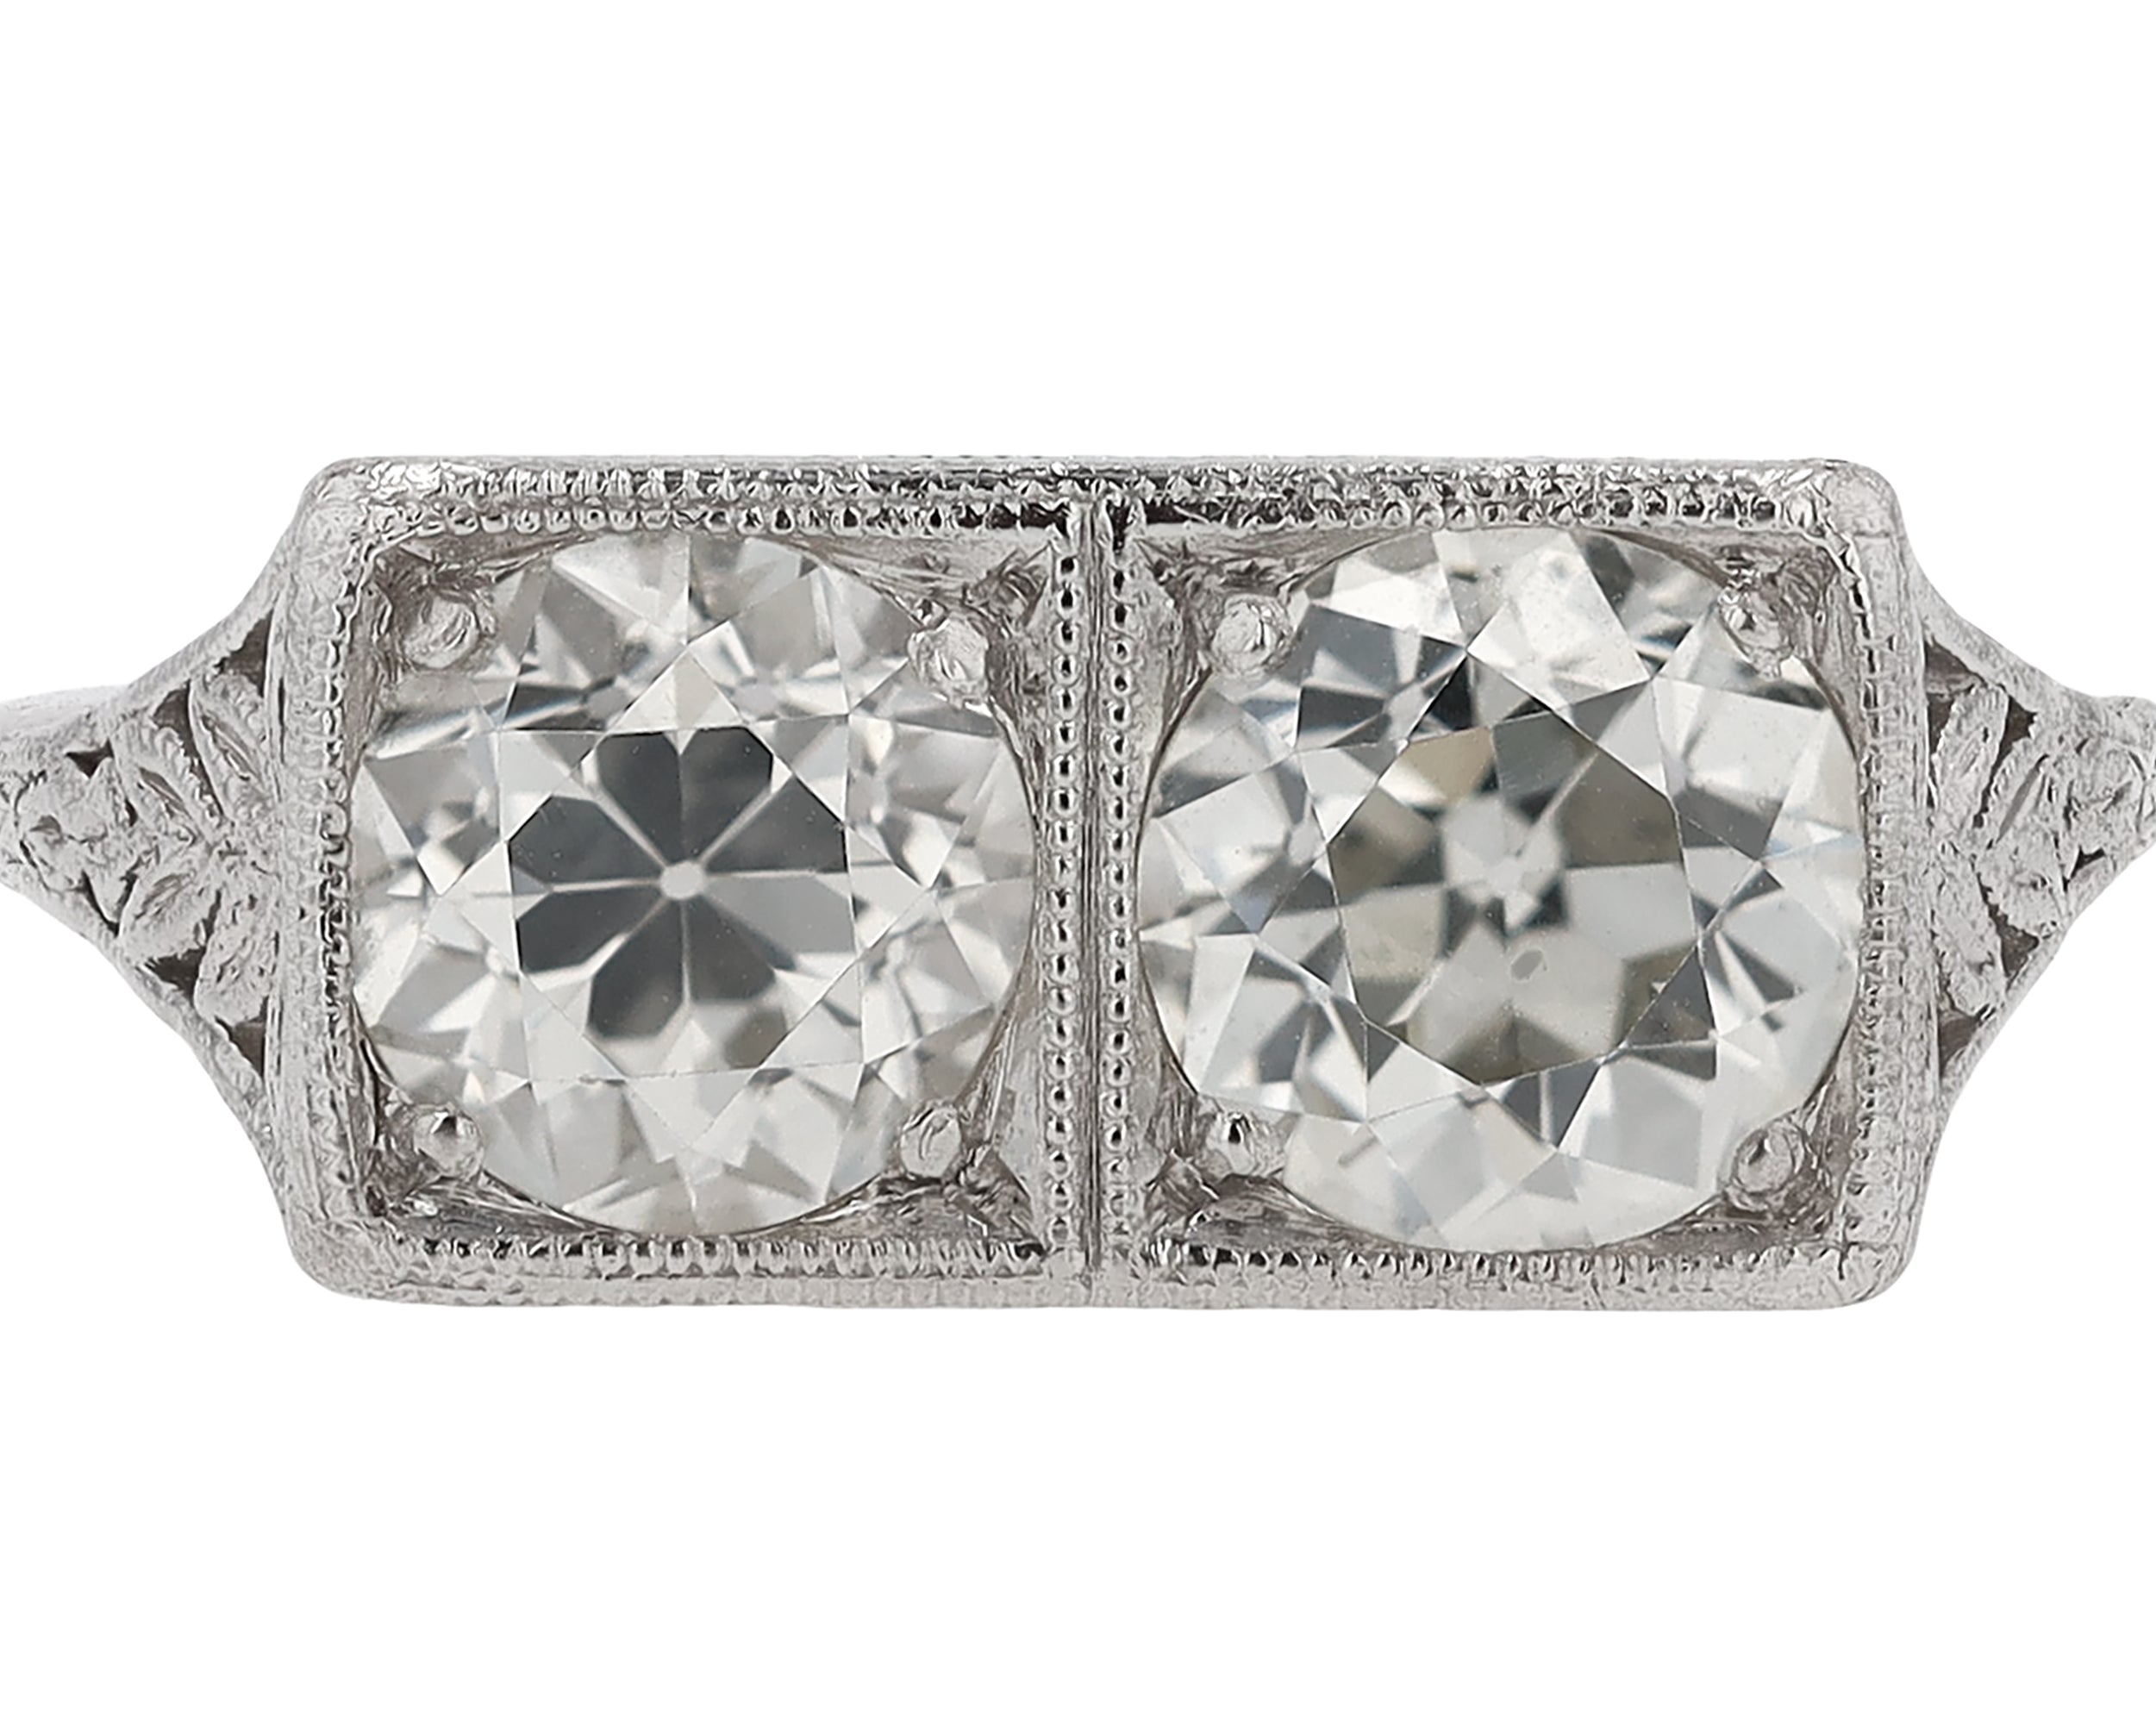 1920s Art Deco 2.10 Carat Double Diamond Engagement Ring